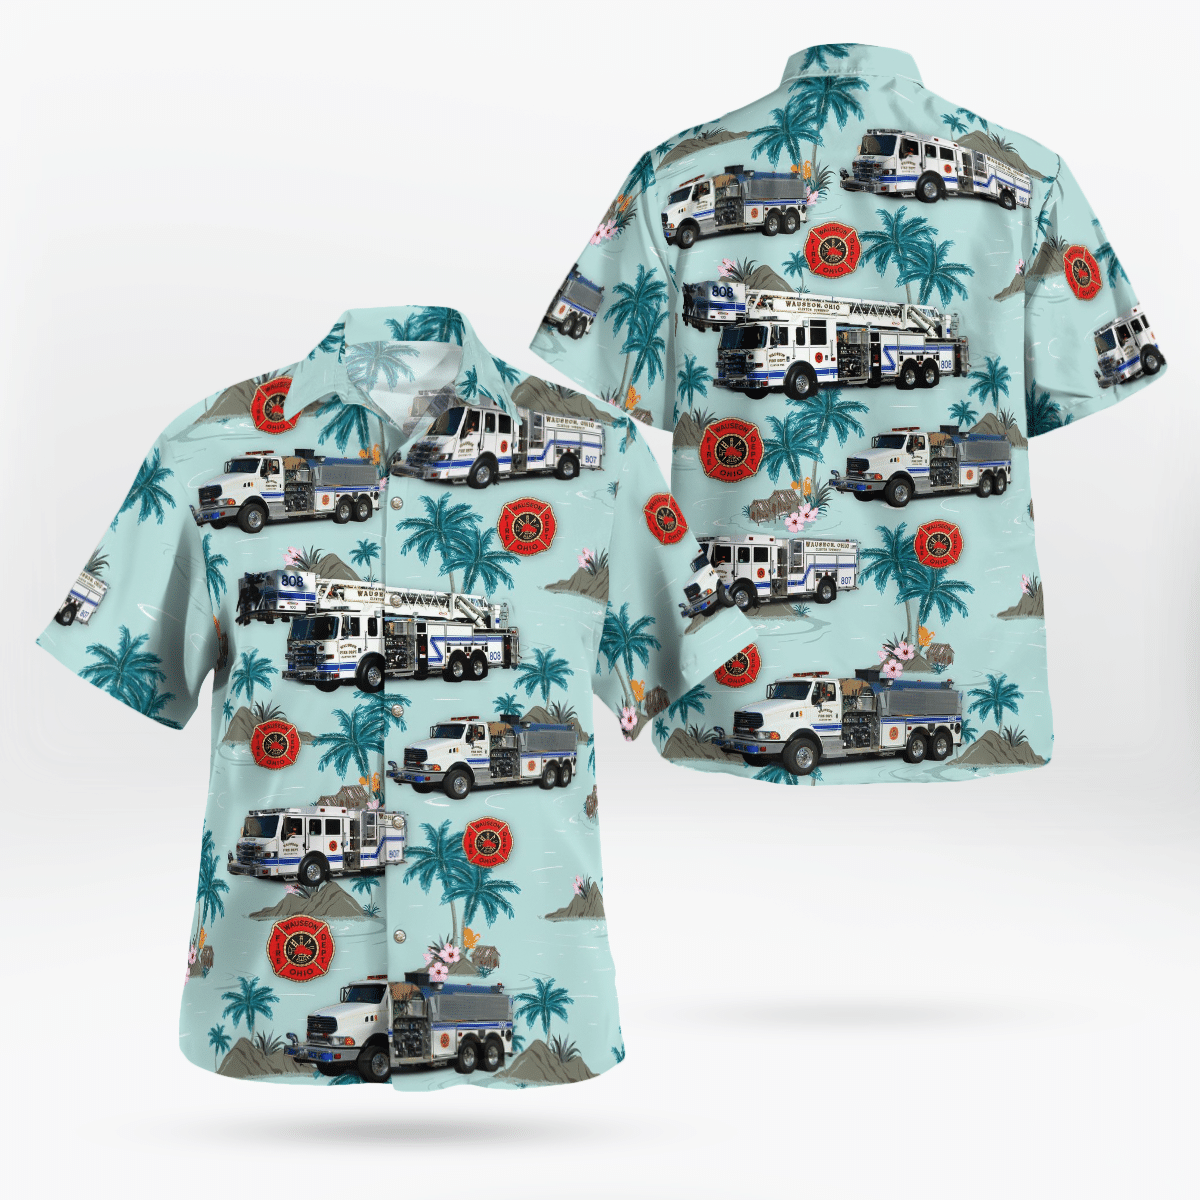 Why don't you order Hot Hawaiian Shirt today? 139